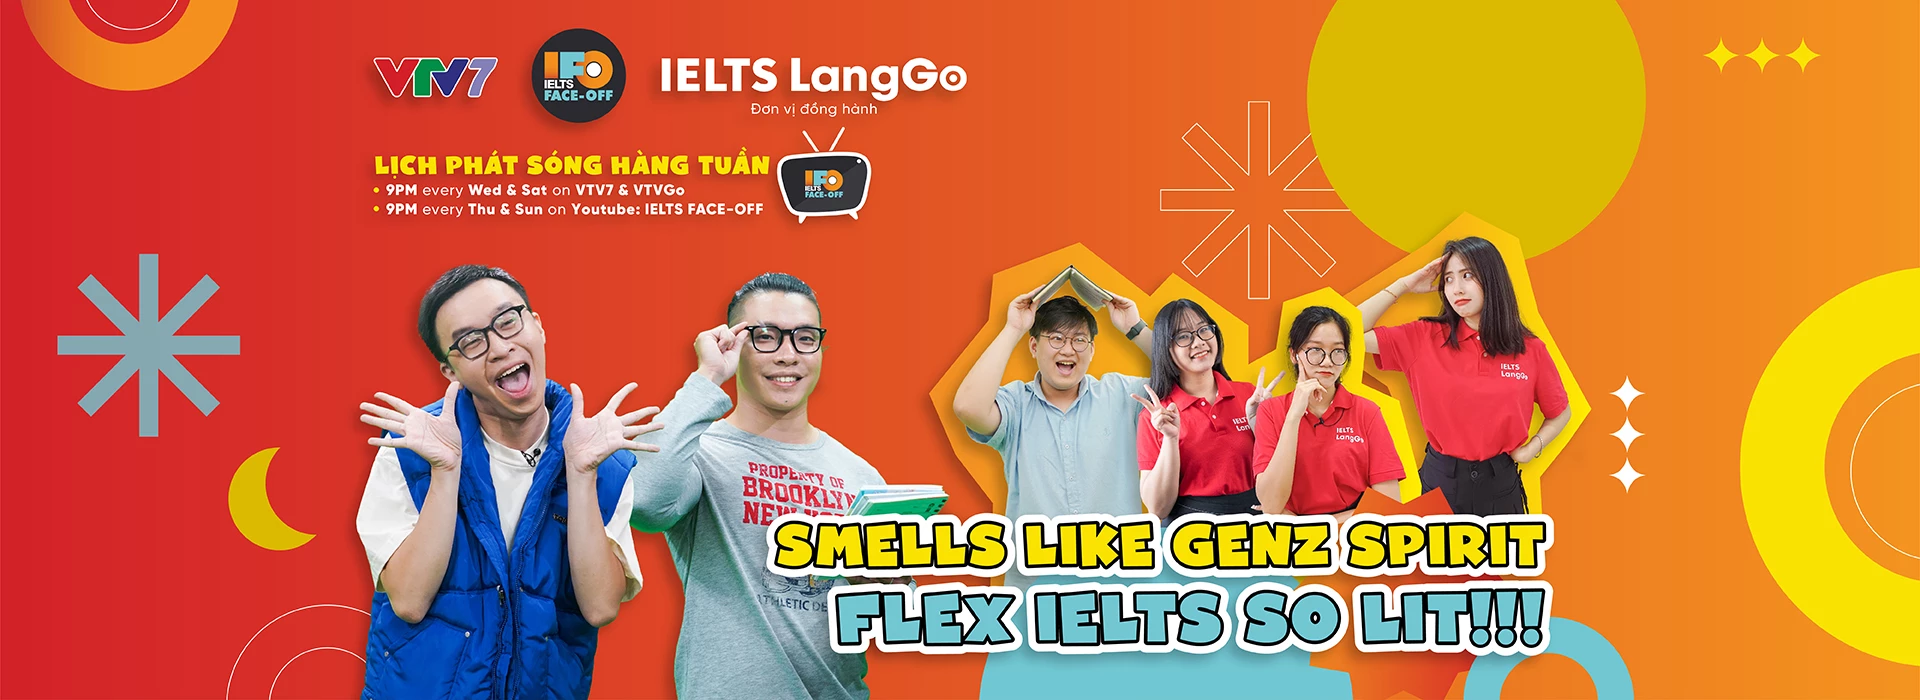 Banner trang chủ: IELTS LangGo x IFO